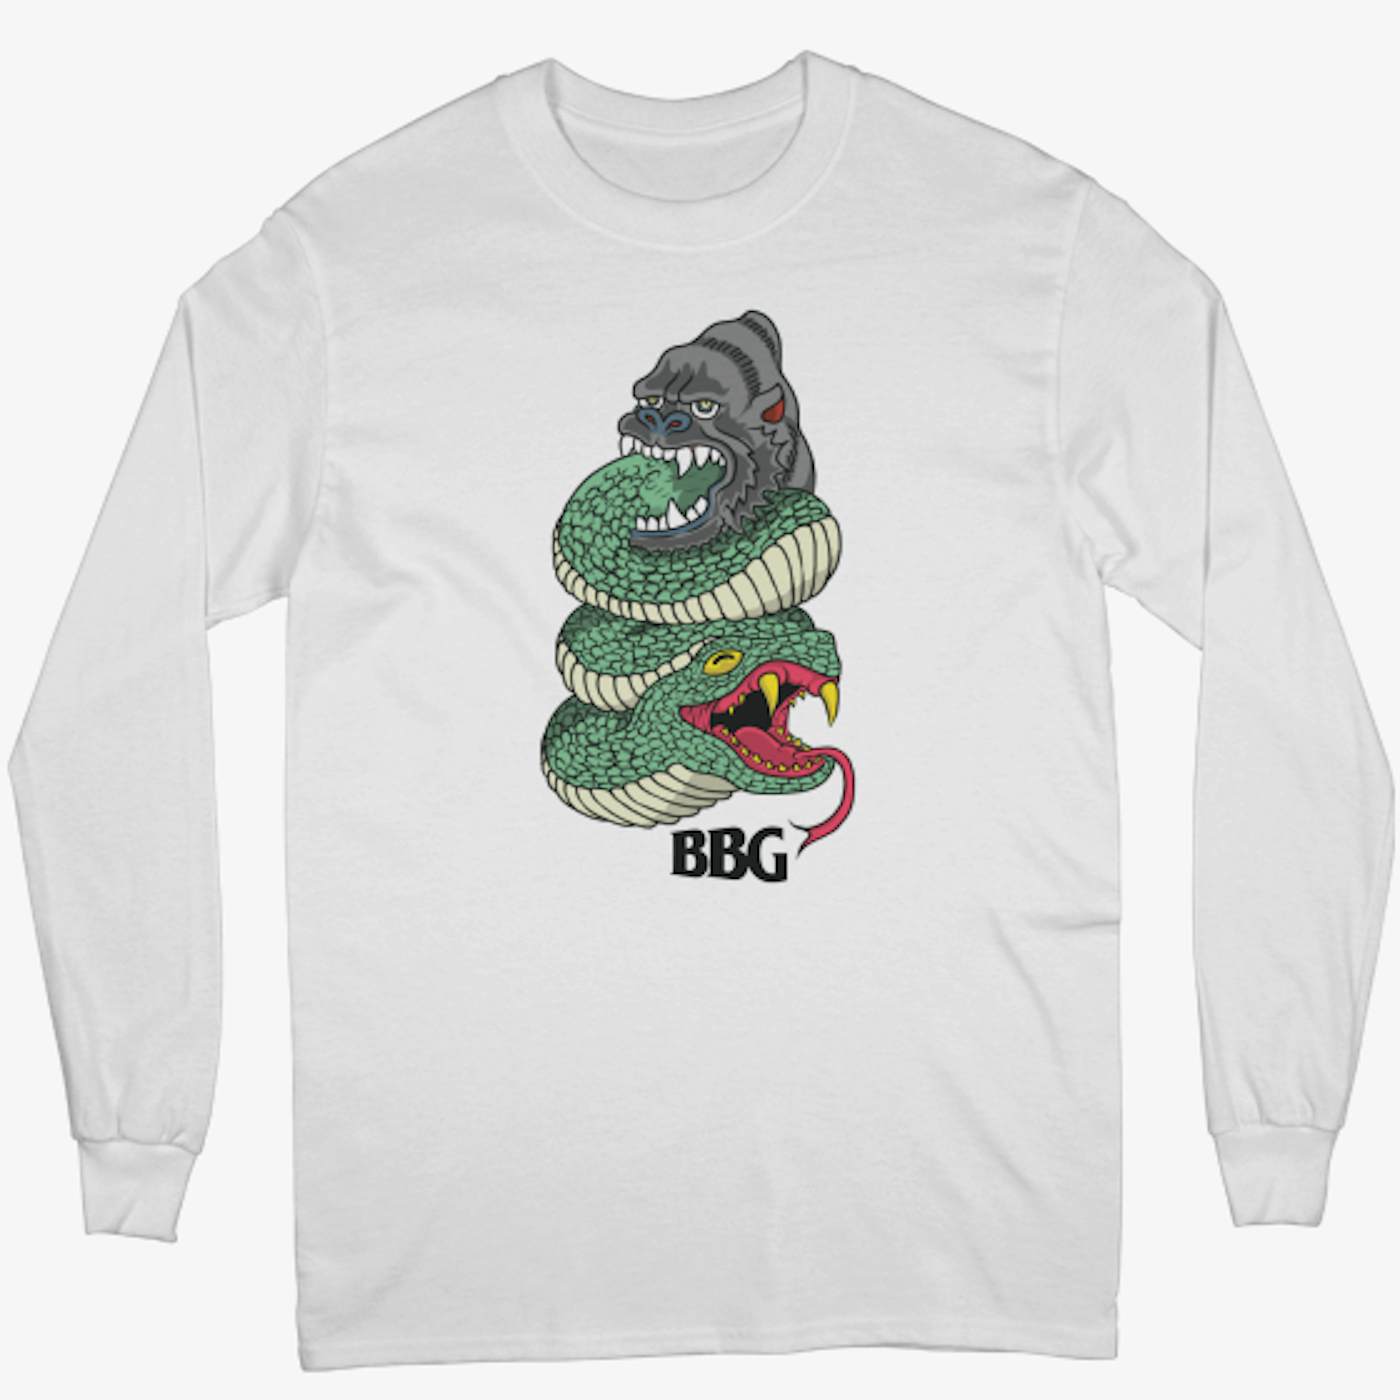 BBG Baby Joe BBG Snake T-shirt - Long Sleeve Tee